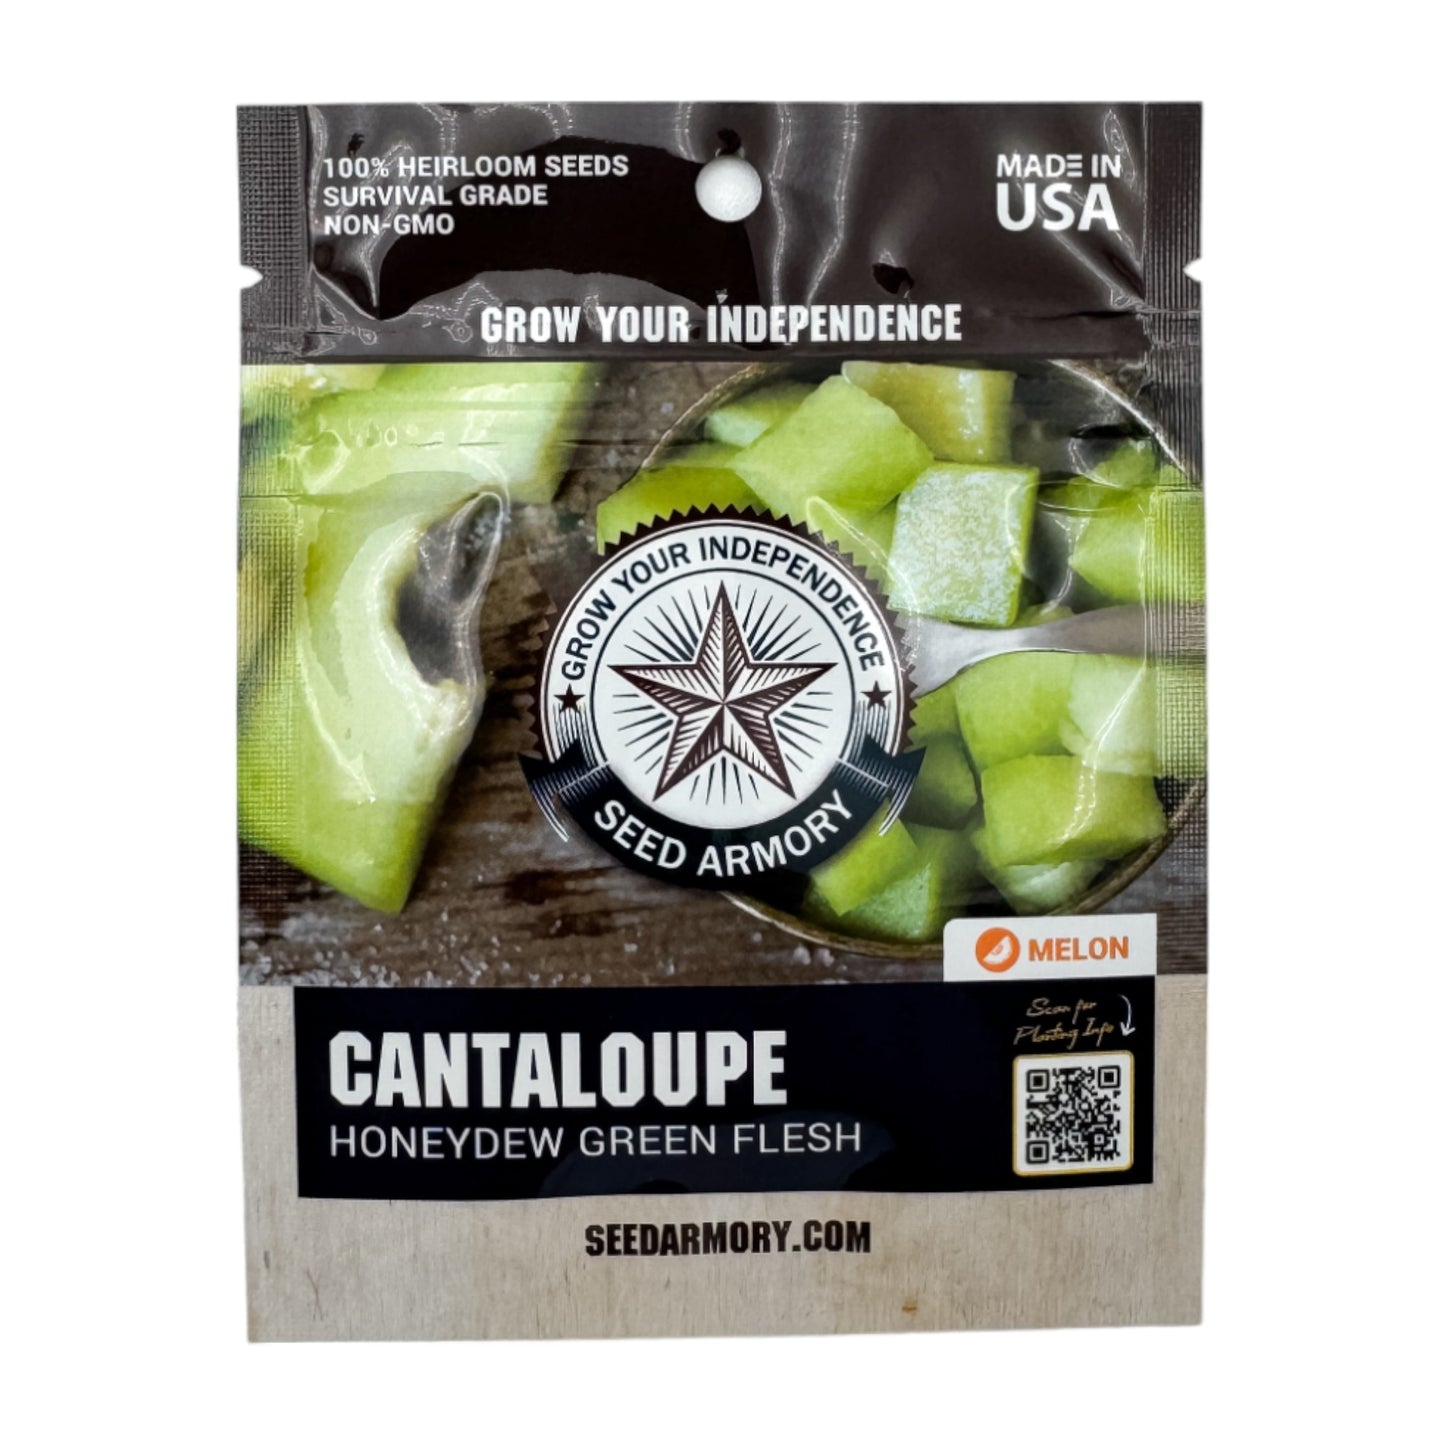 Packet of Honeydew Green Fresh cantaloupe heirloom seeds